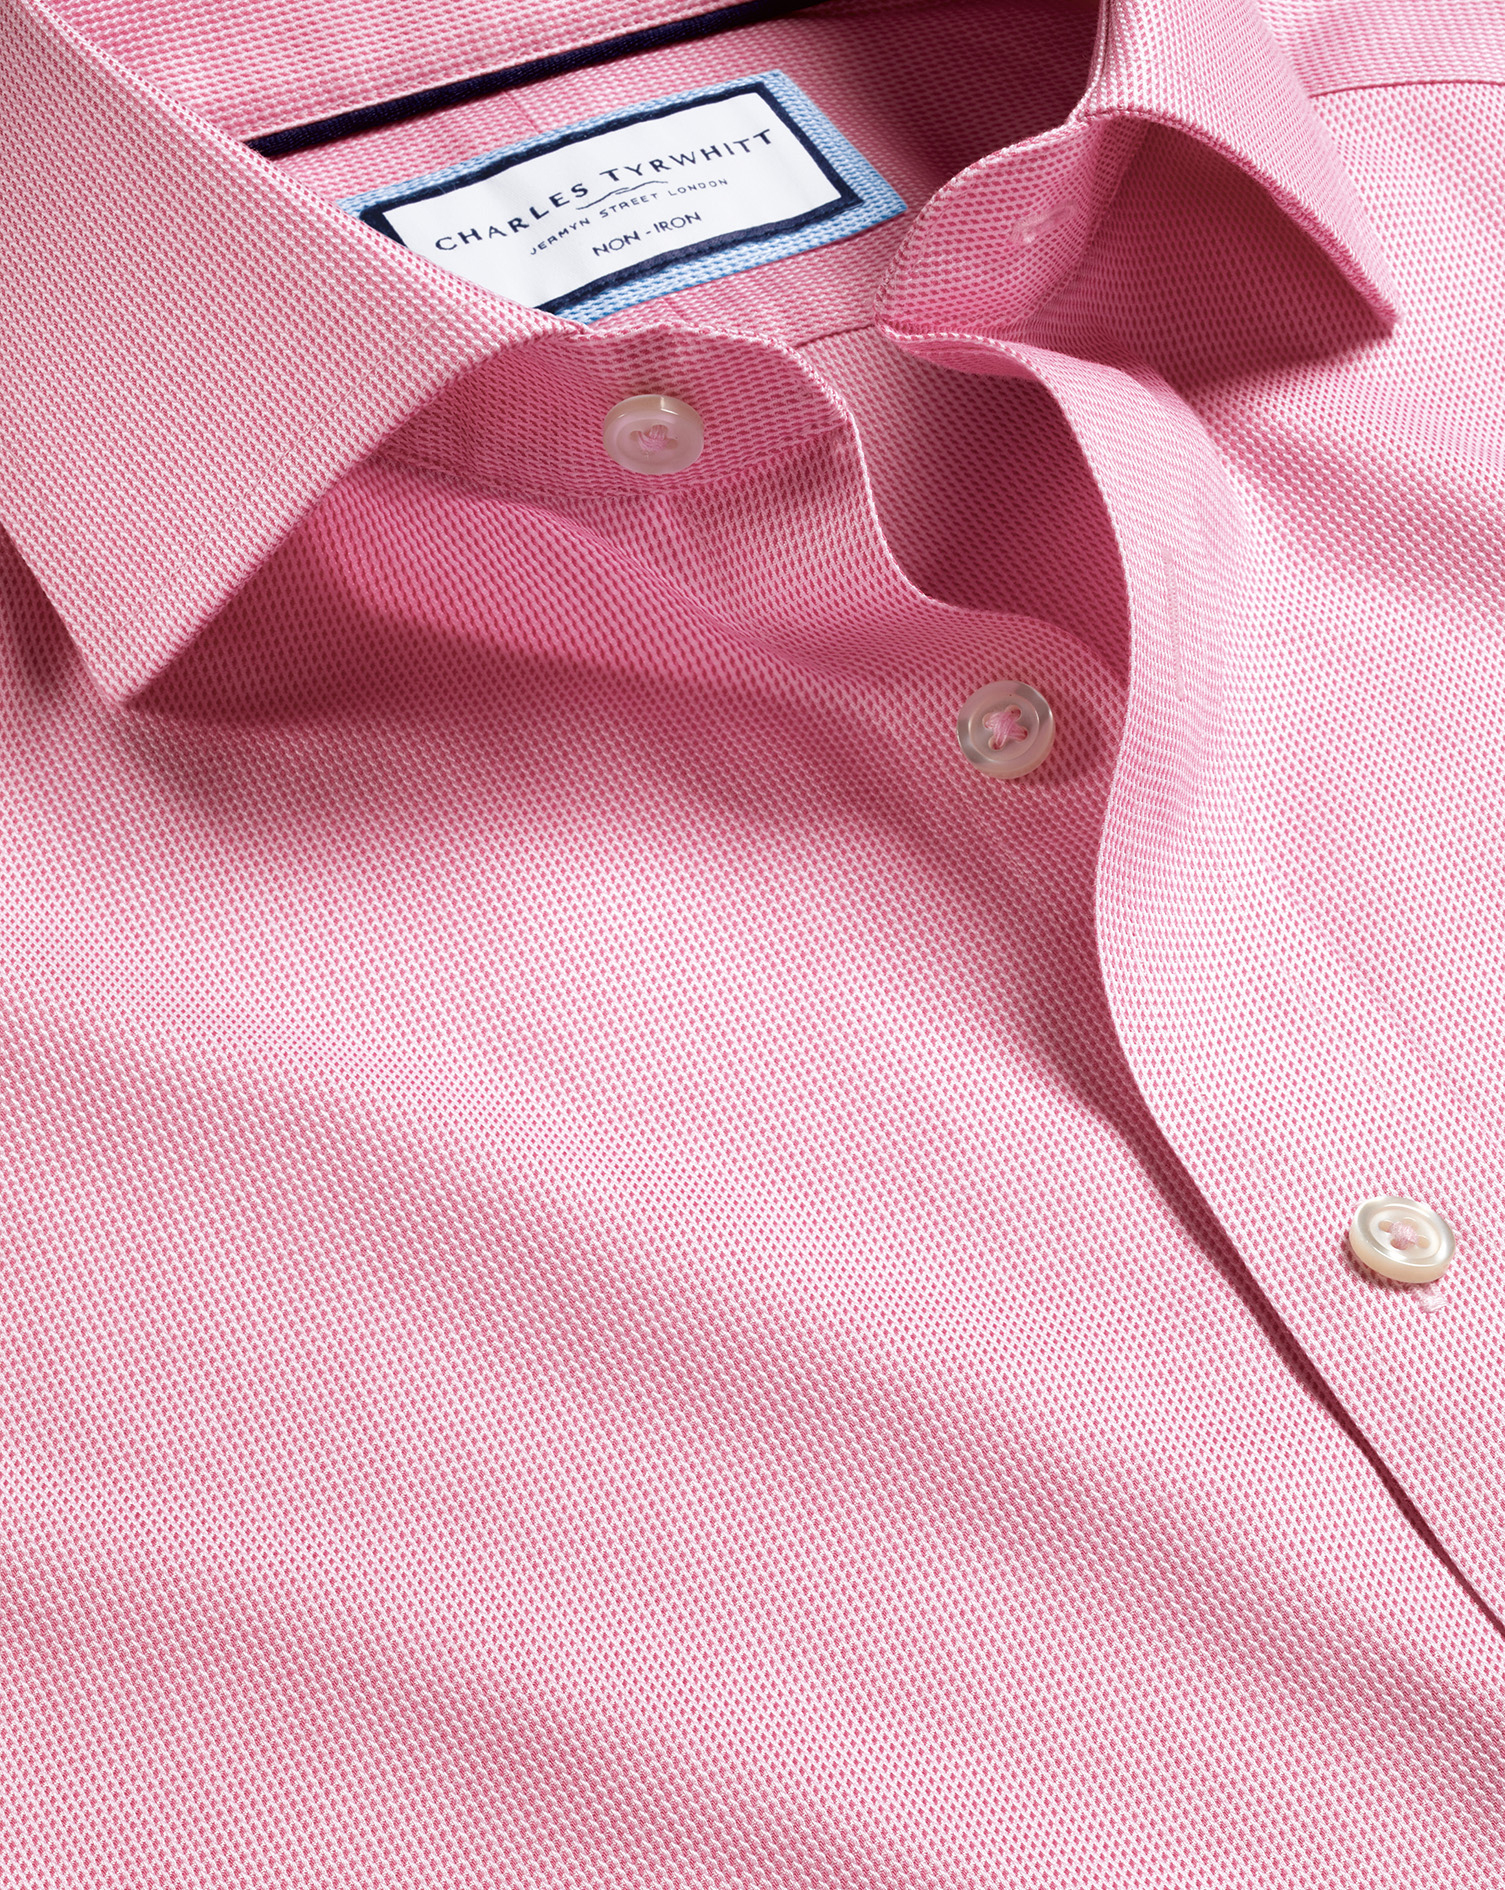 Men's Charles Tyrwhitt Cutaway Collar Non-Iron Clifton Weave Dress Shirt - Pink Single Cuff Size 15/